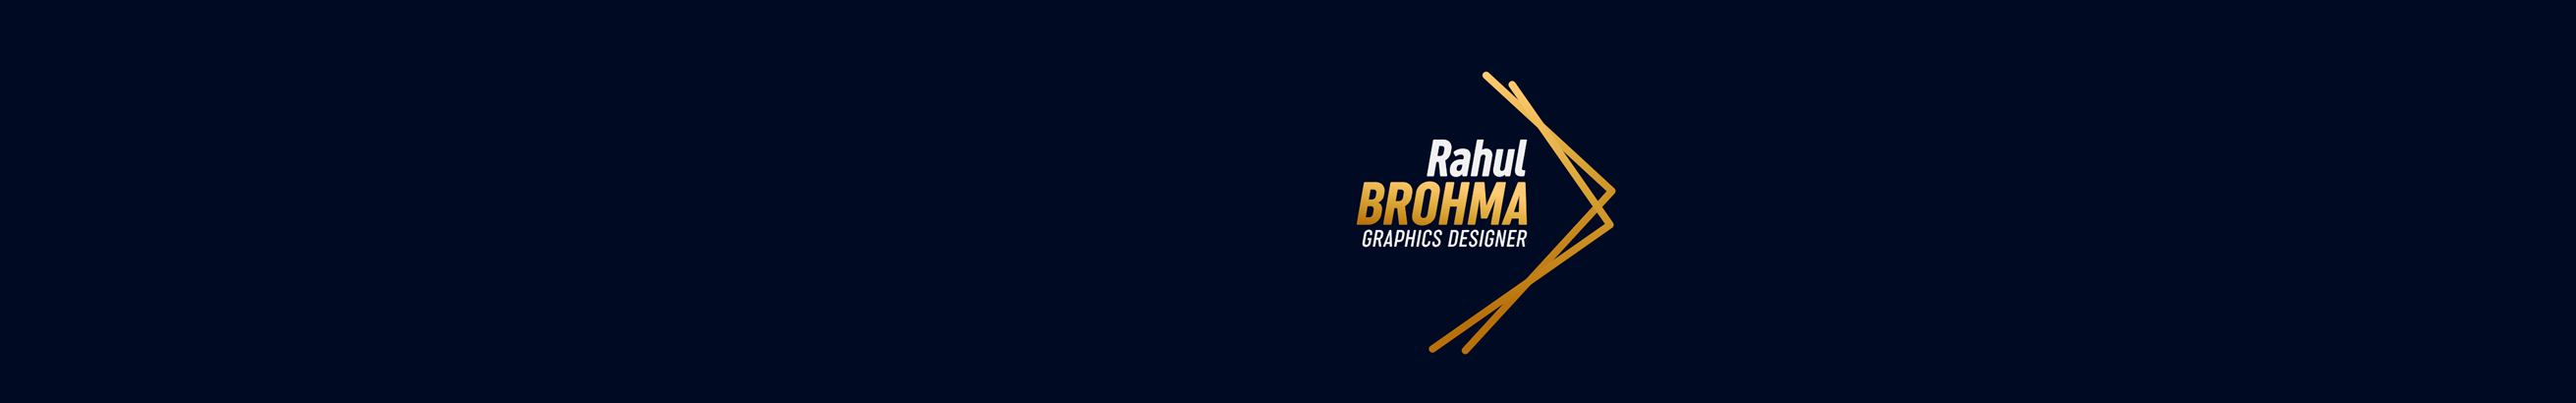 Rahul Brohma's profile banner